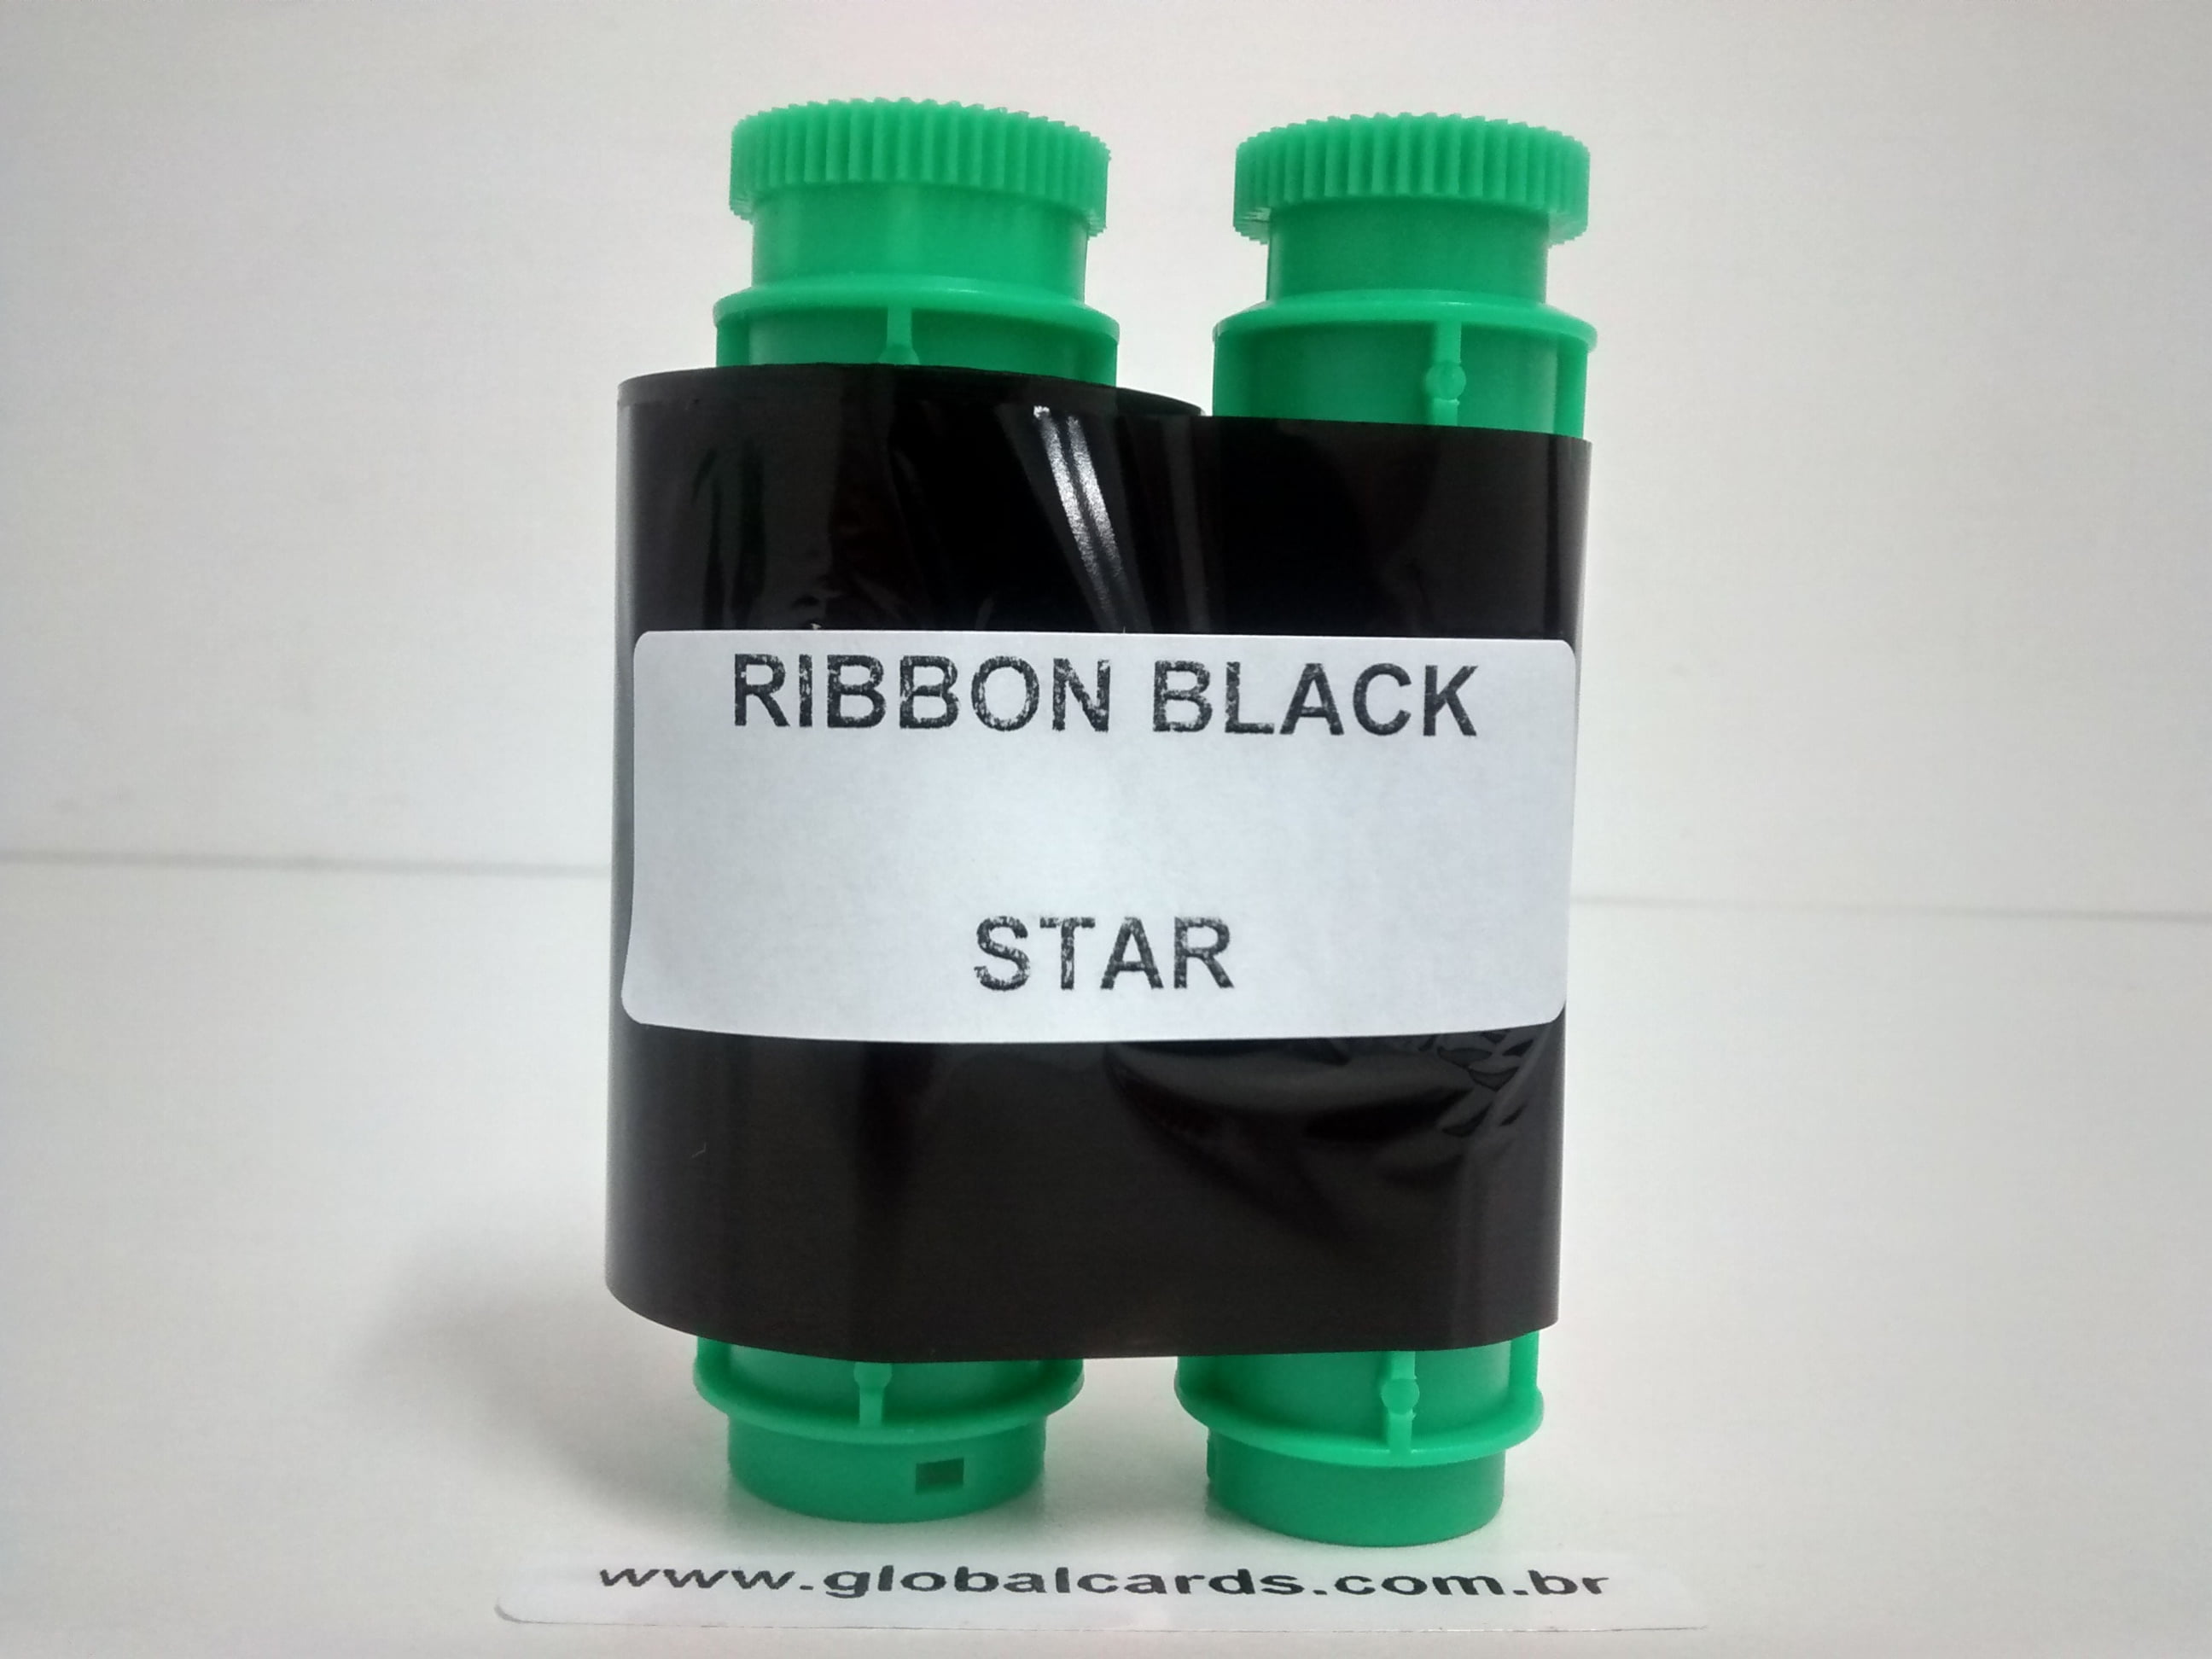 Ribbon Star Preto Point man TP-9X00 para 1000 impressões